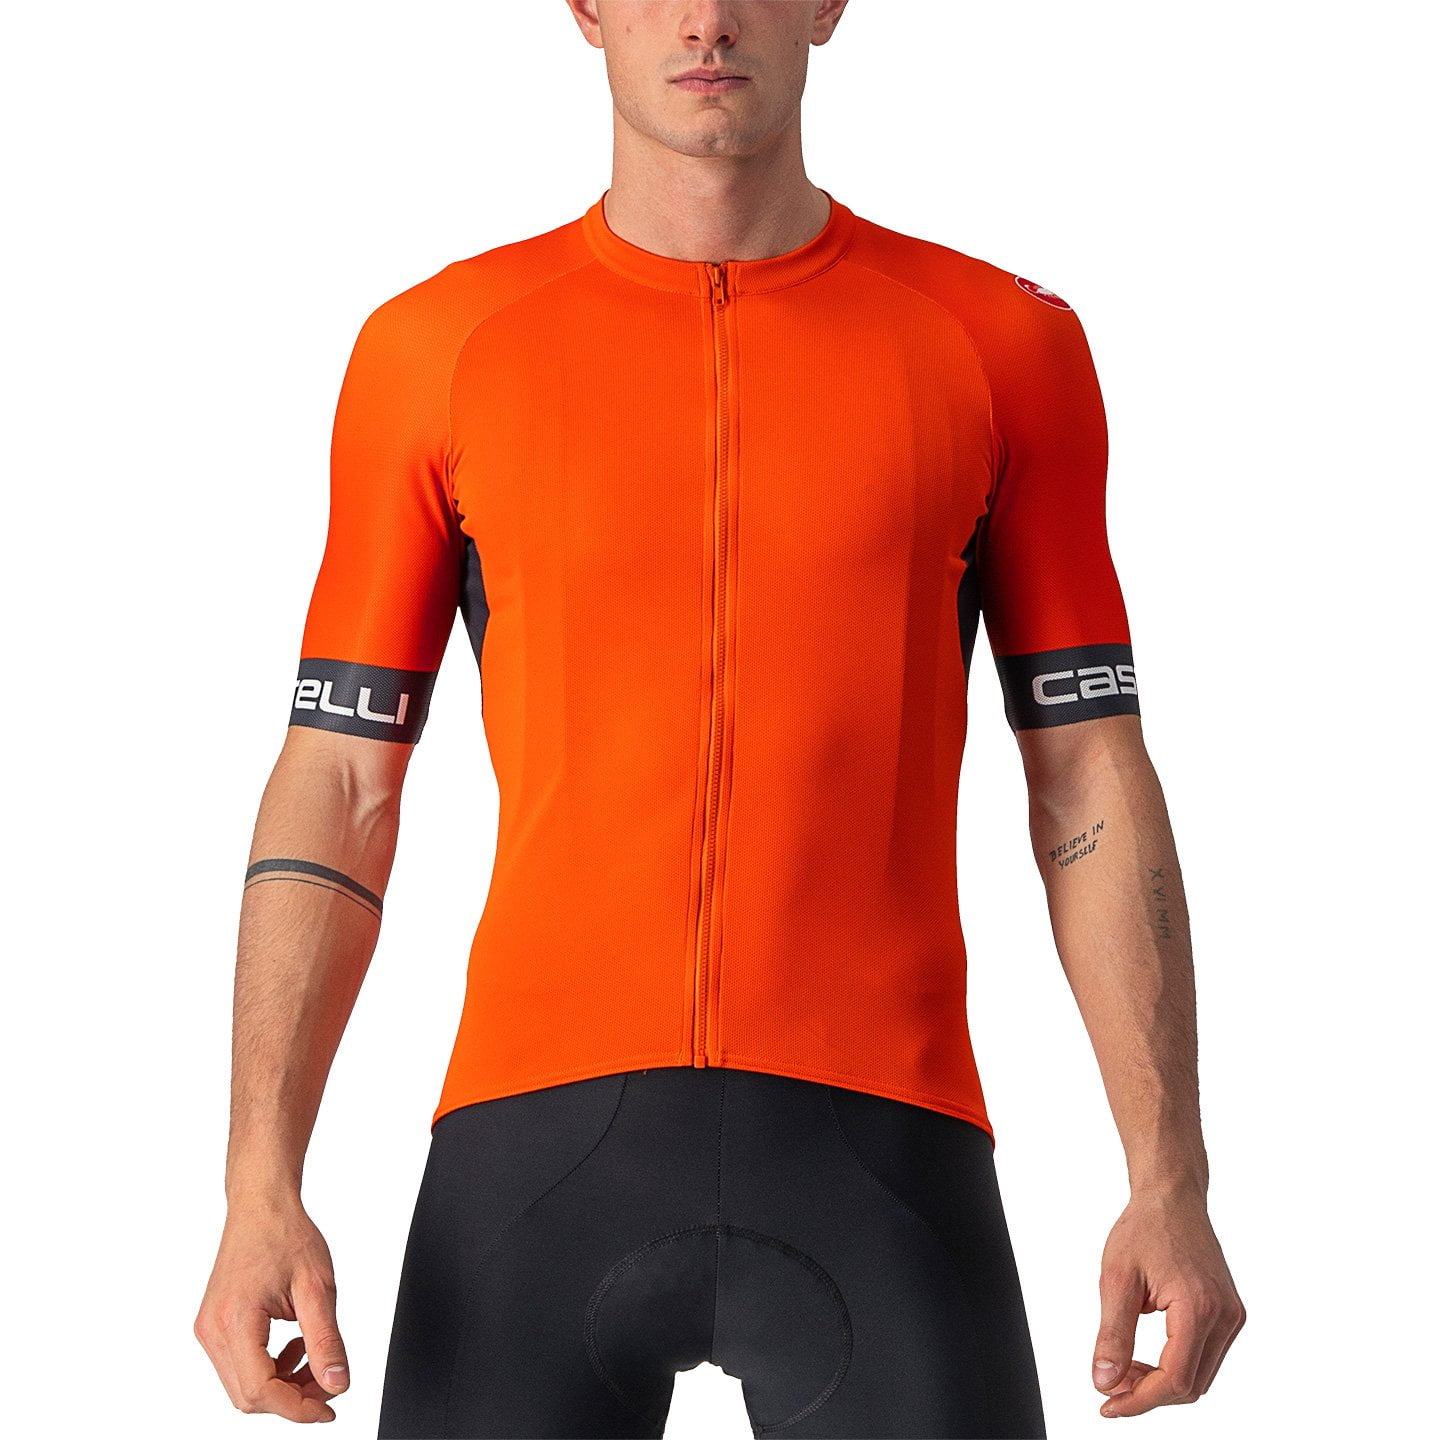 CASTELLI Entrata VI Short Sleeve Jersey Short Sleeve Jersey, for men, size S, Cycling jersey, Cycling clothing